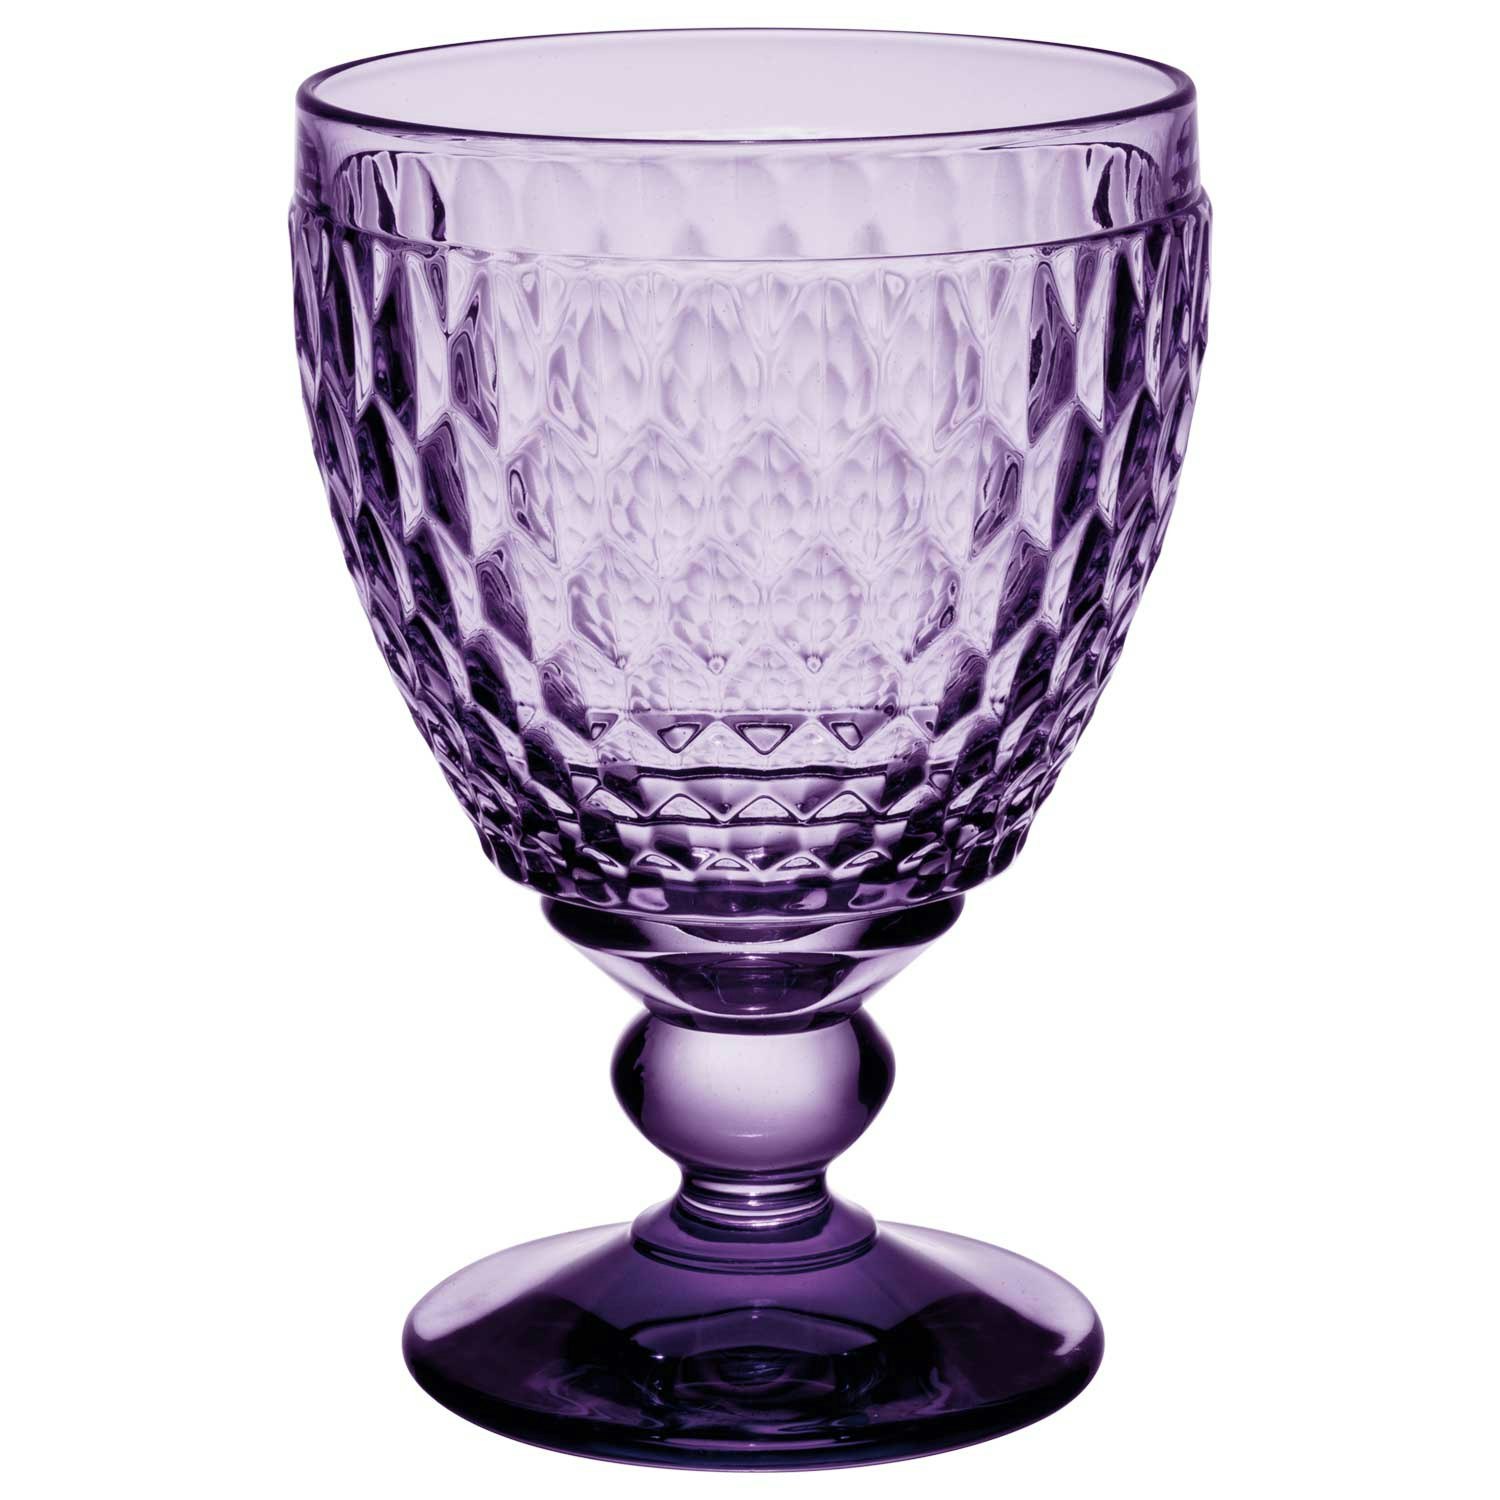 Ovid Water Glass 42 cl Set Of 4 - Villeroy & Boch @ RoyalDesign